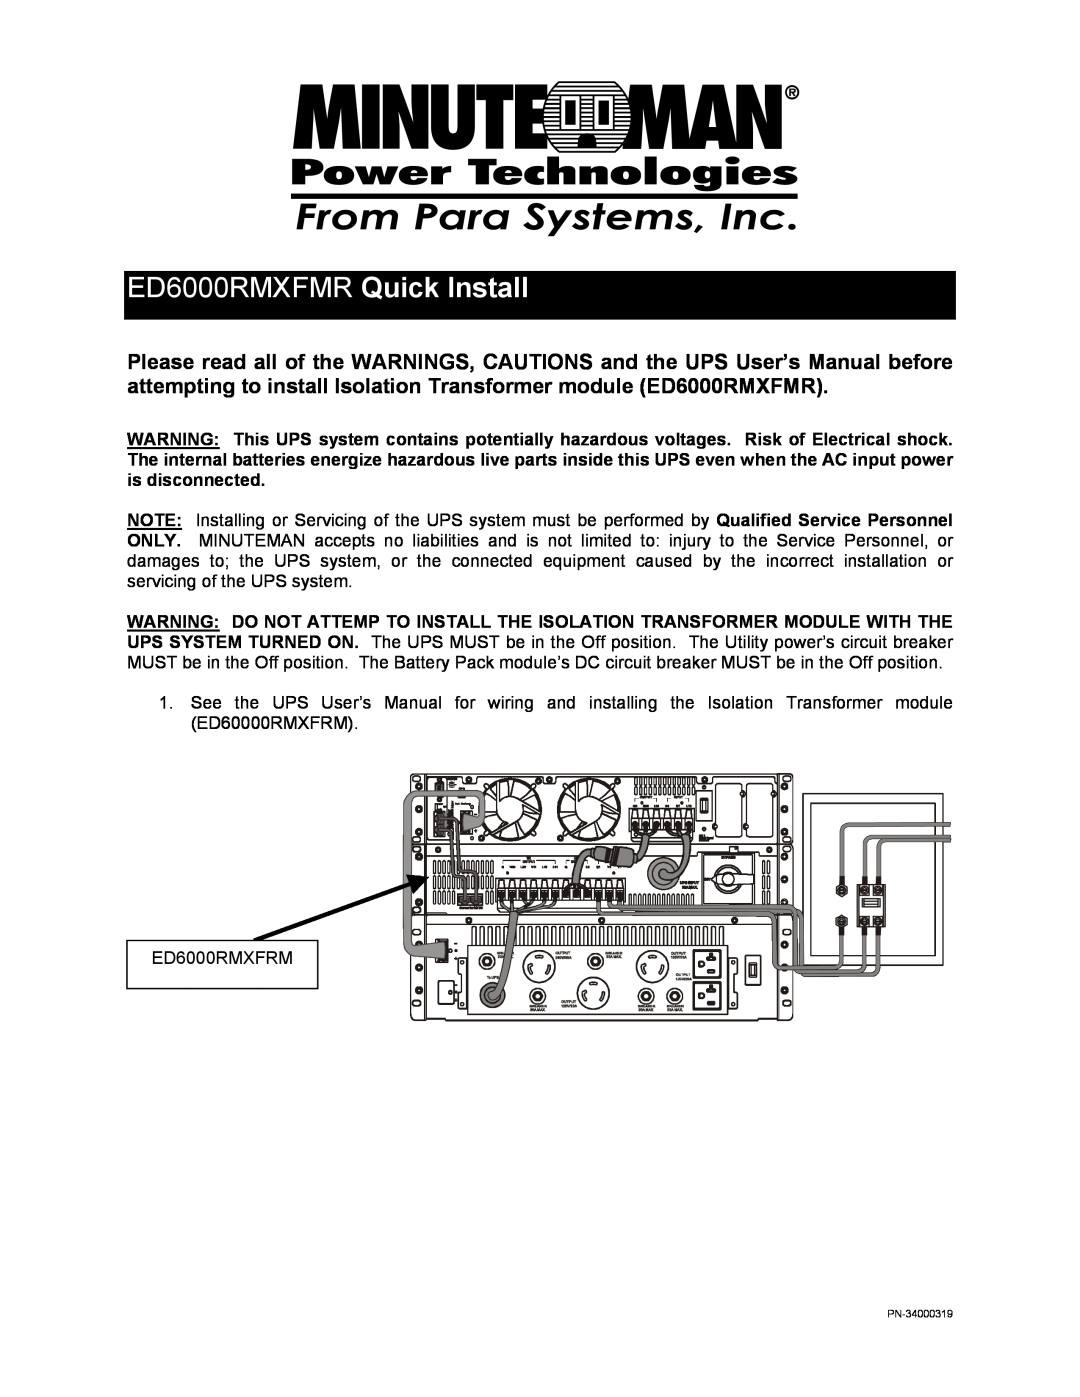 Minuteman UPS user manual ED6000RMXFMR Quick Install 